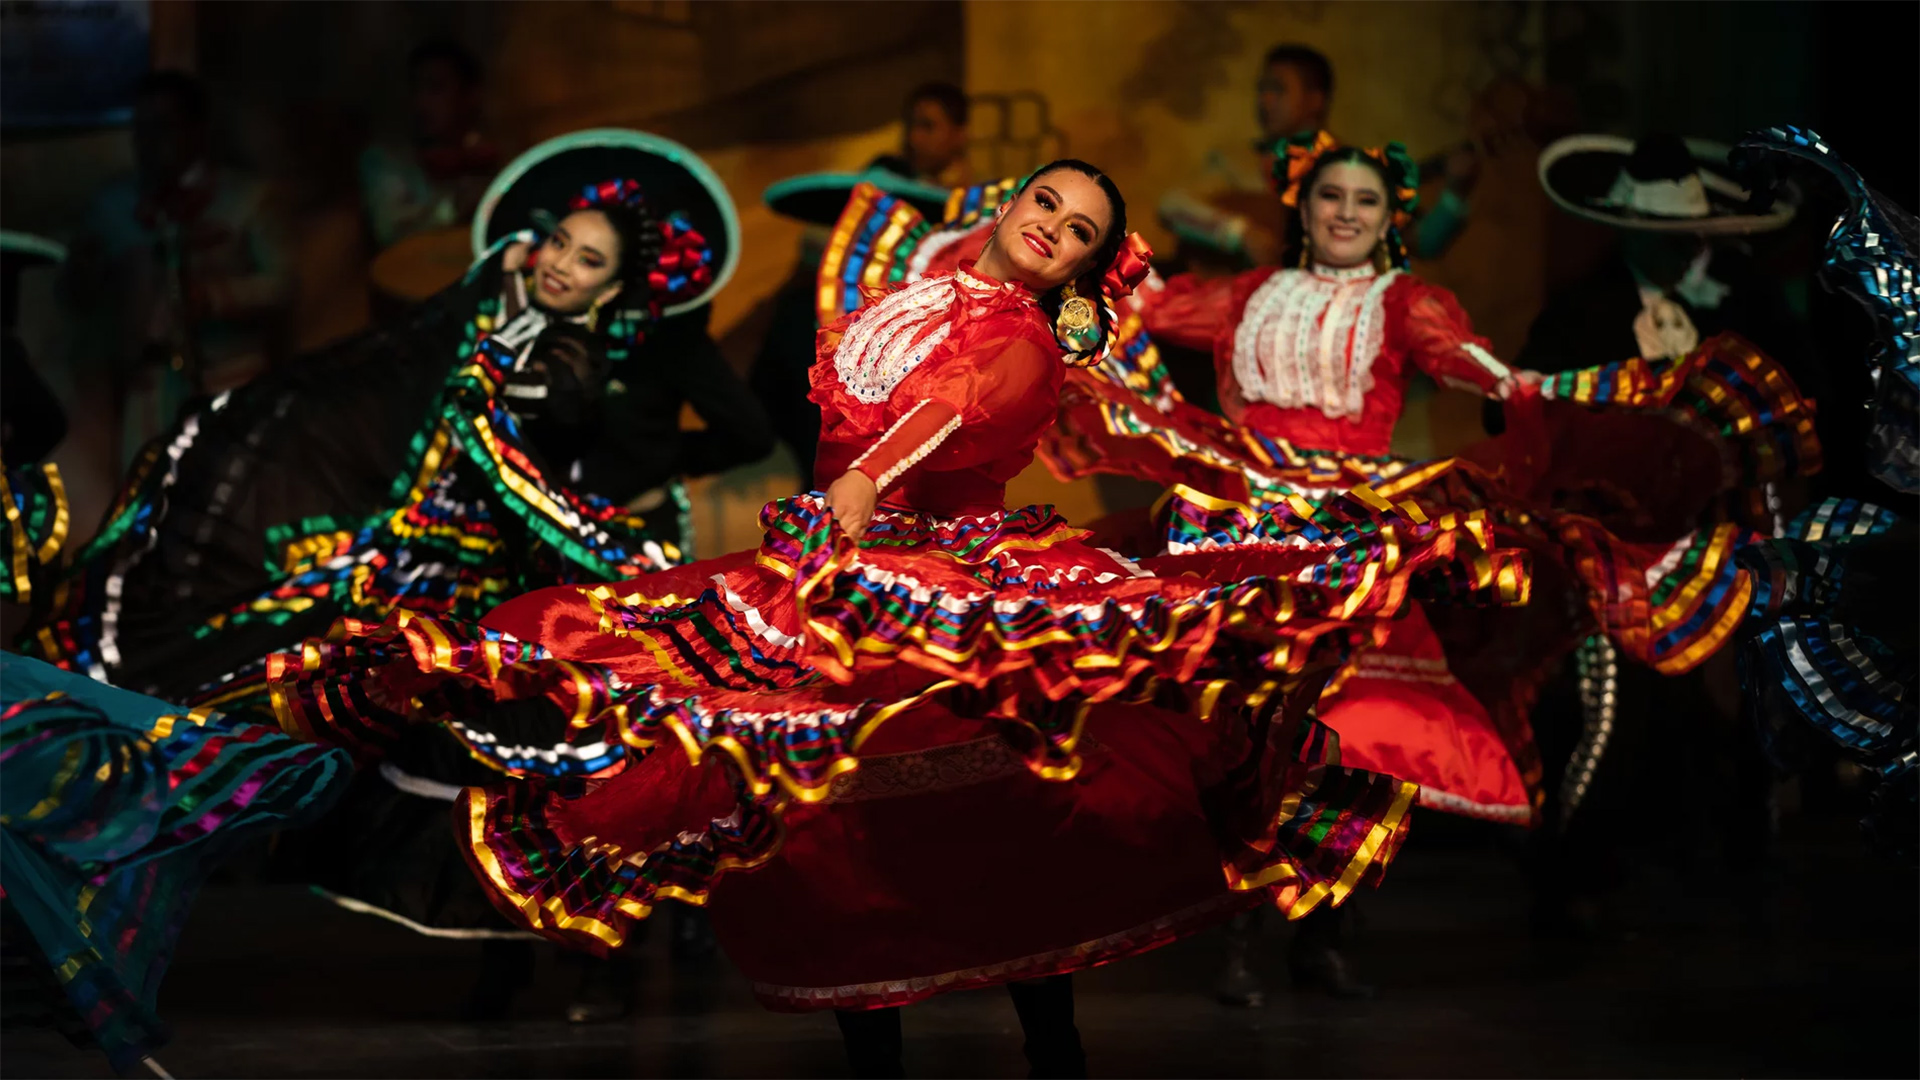 Members of the group Danzas y Bailes tradicionales Alma Mexicana perform a regional dance from Jalisco, México, at México City's Teatro Ferrocarrilero Gudelio Morales in July.